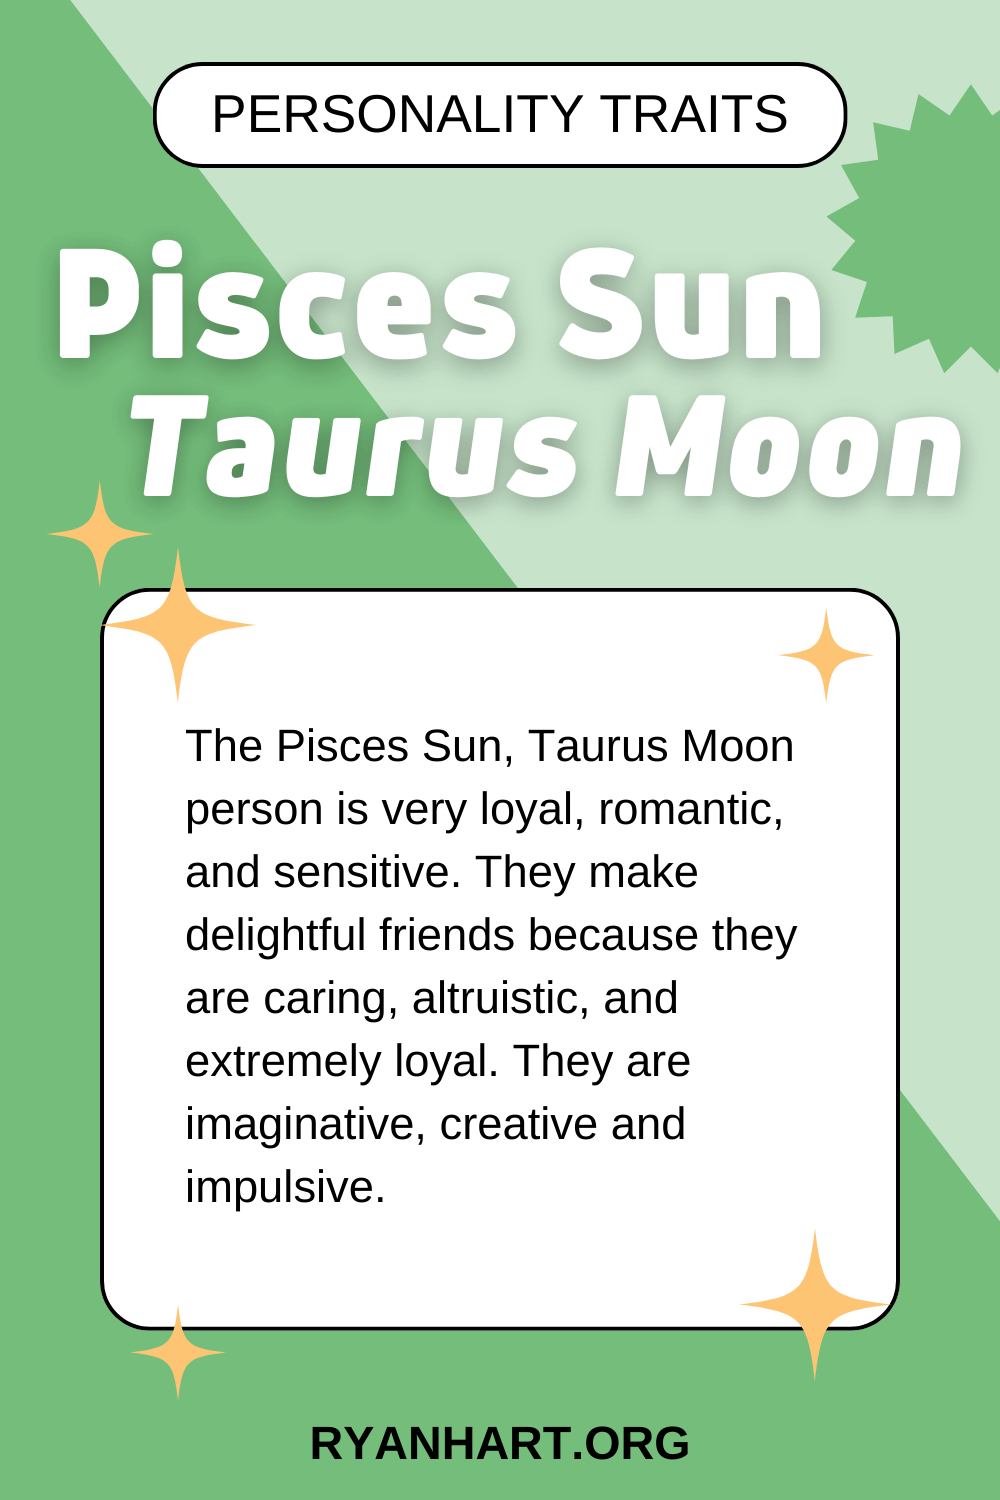 Pisces Sun Taurus Moon Description